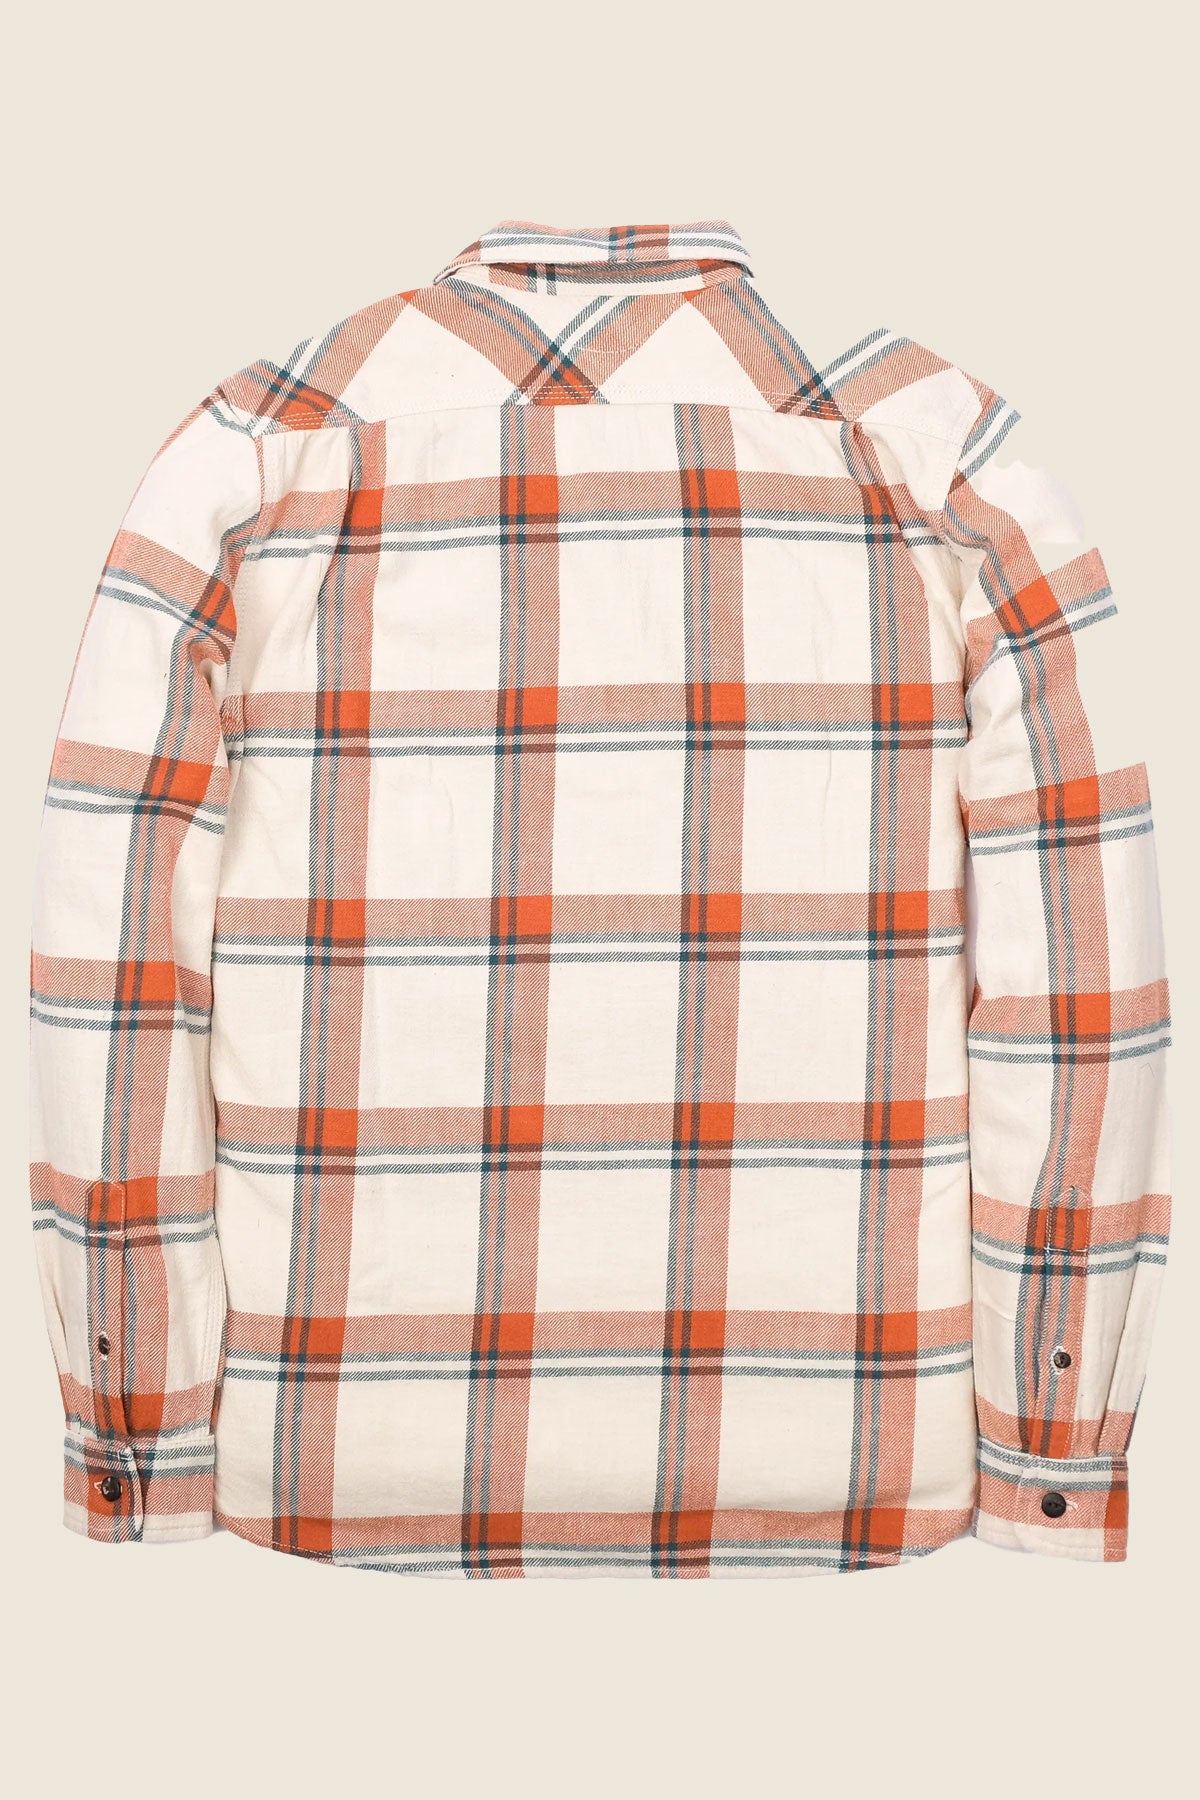 Freenote Cloth - Jepson Sedona Plaid Shirt